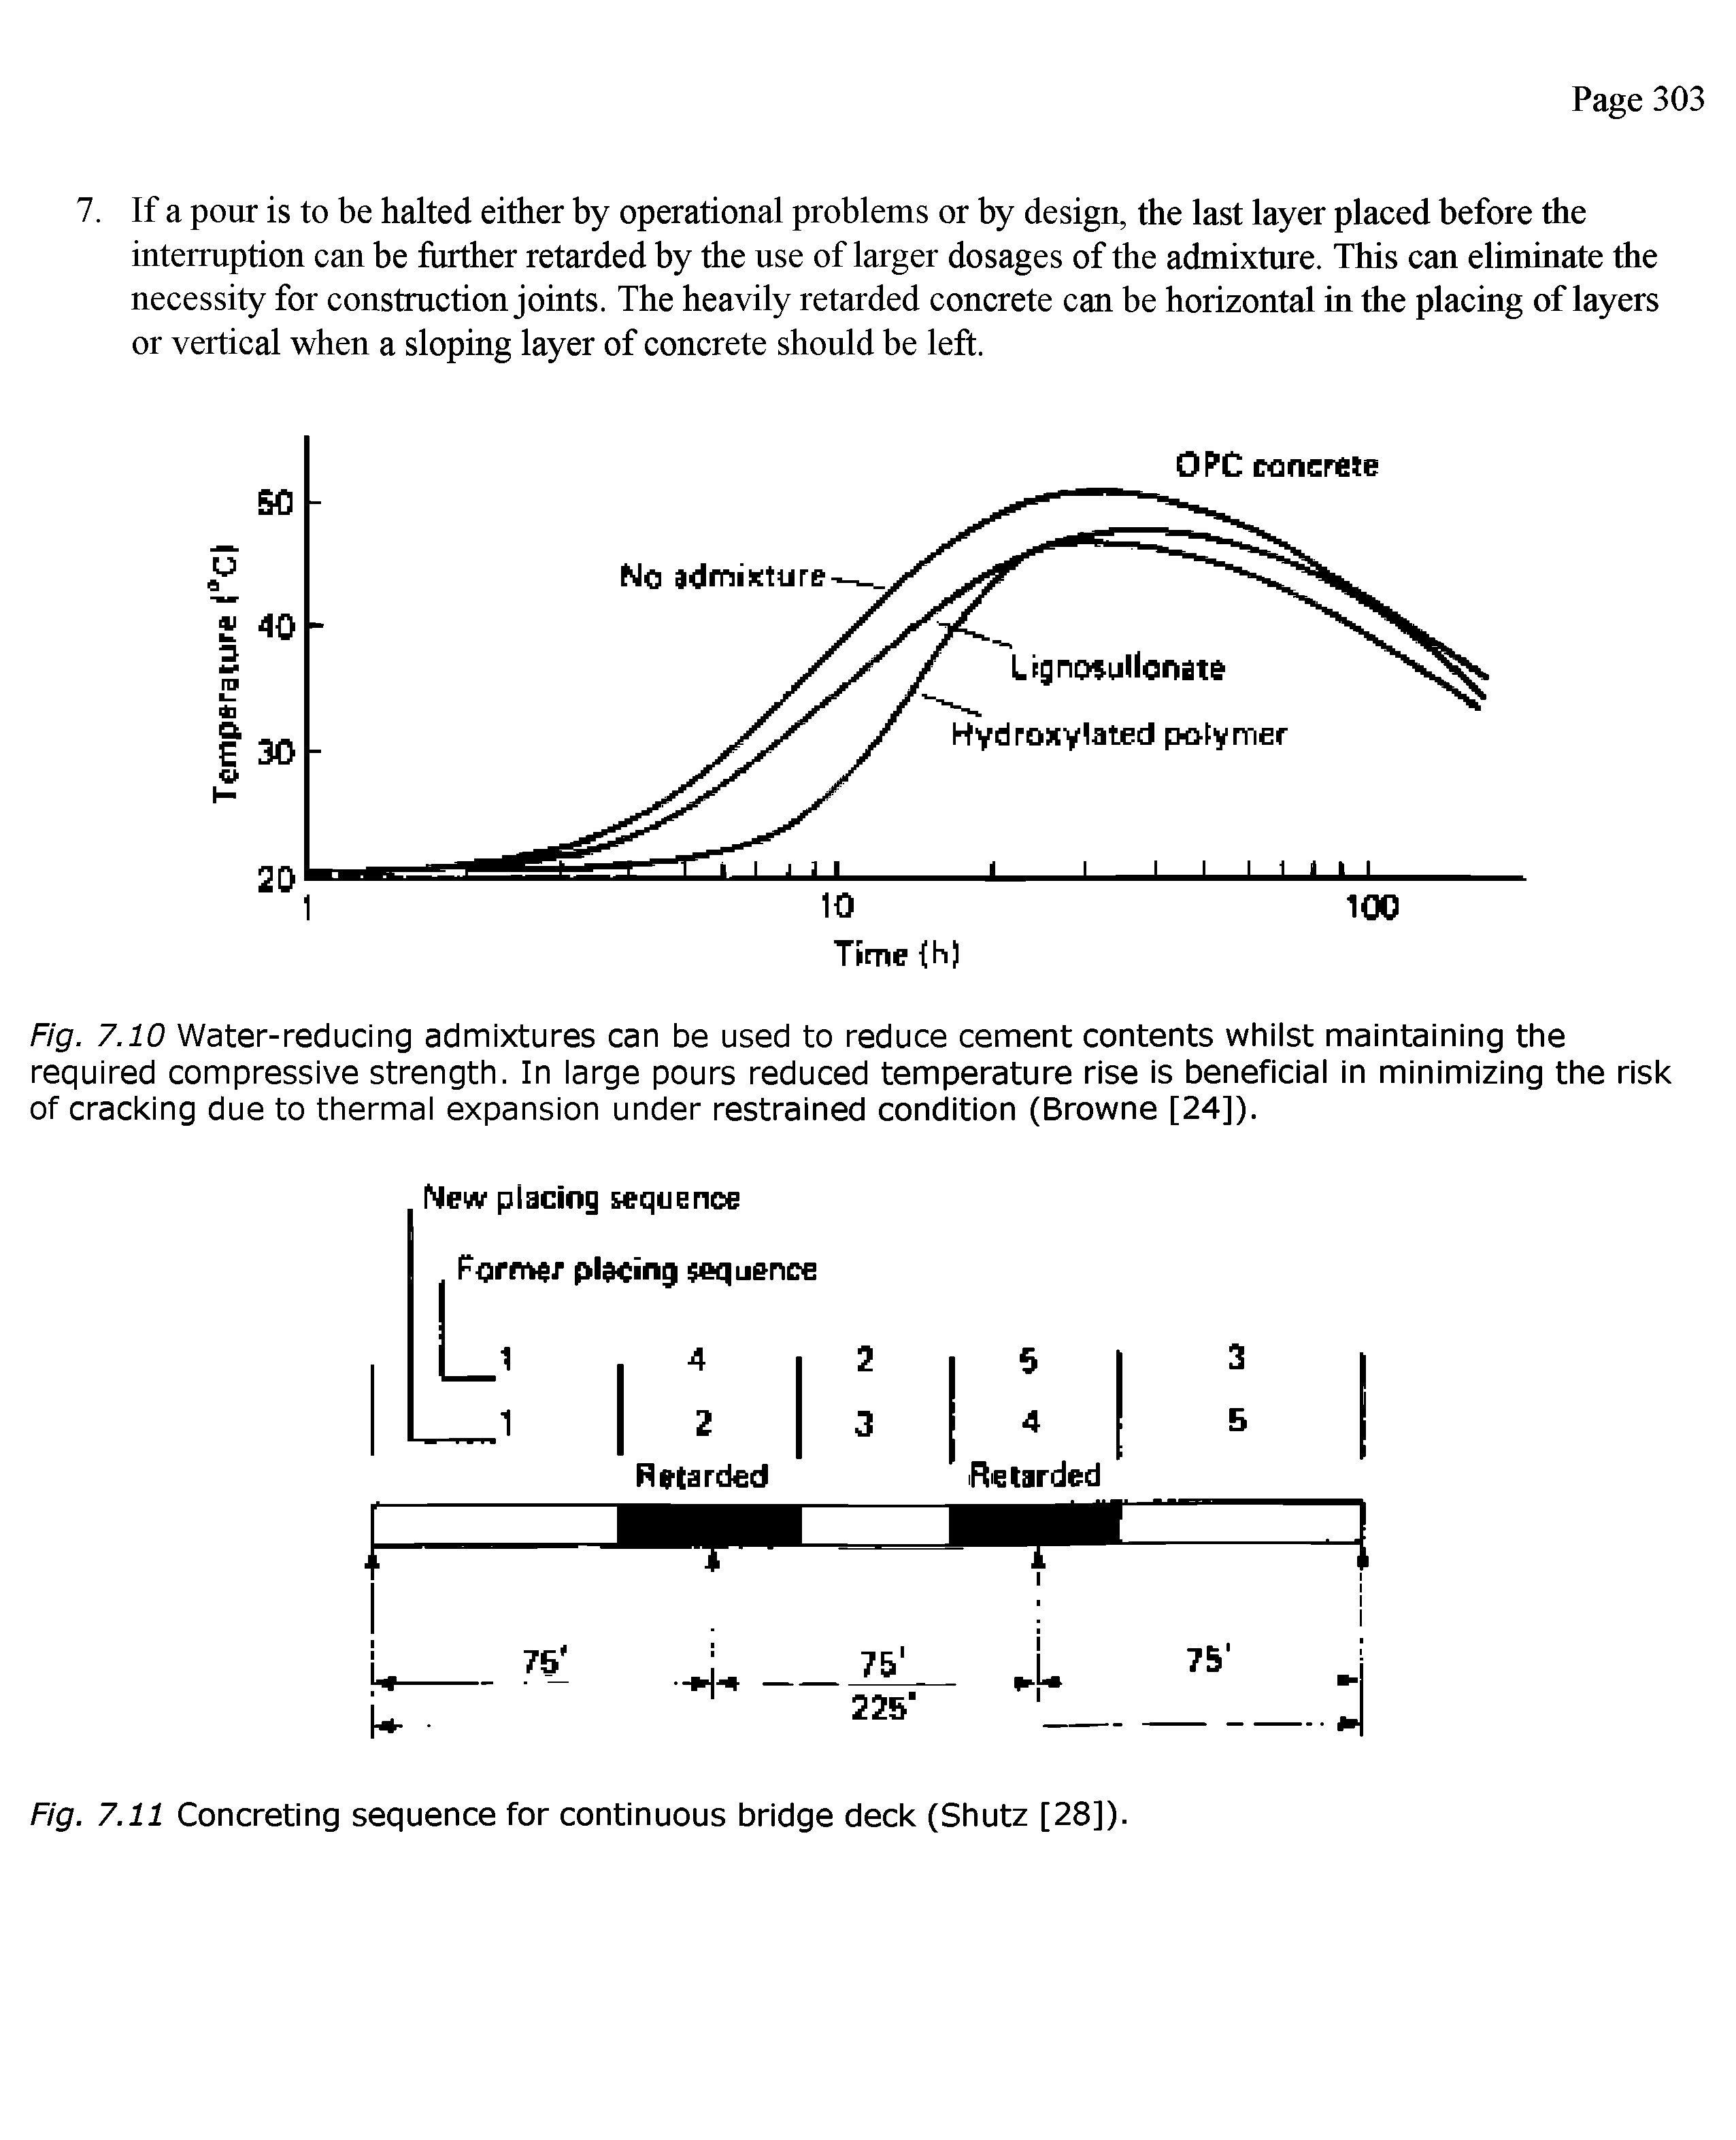 Fig. 7.11 Concreting sequence for continuous bridge deck (Shutz [28]).